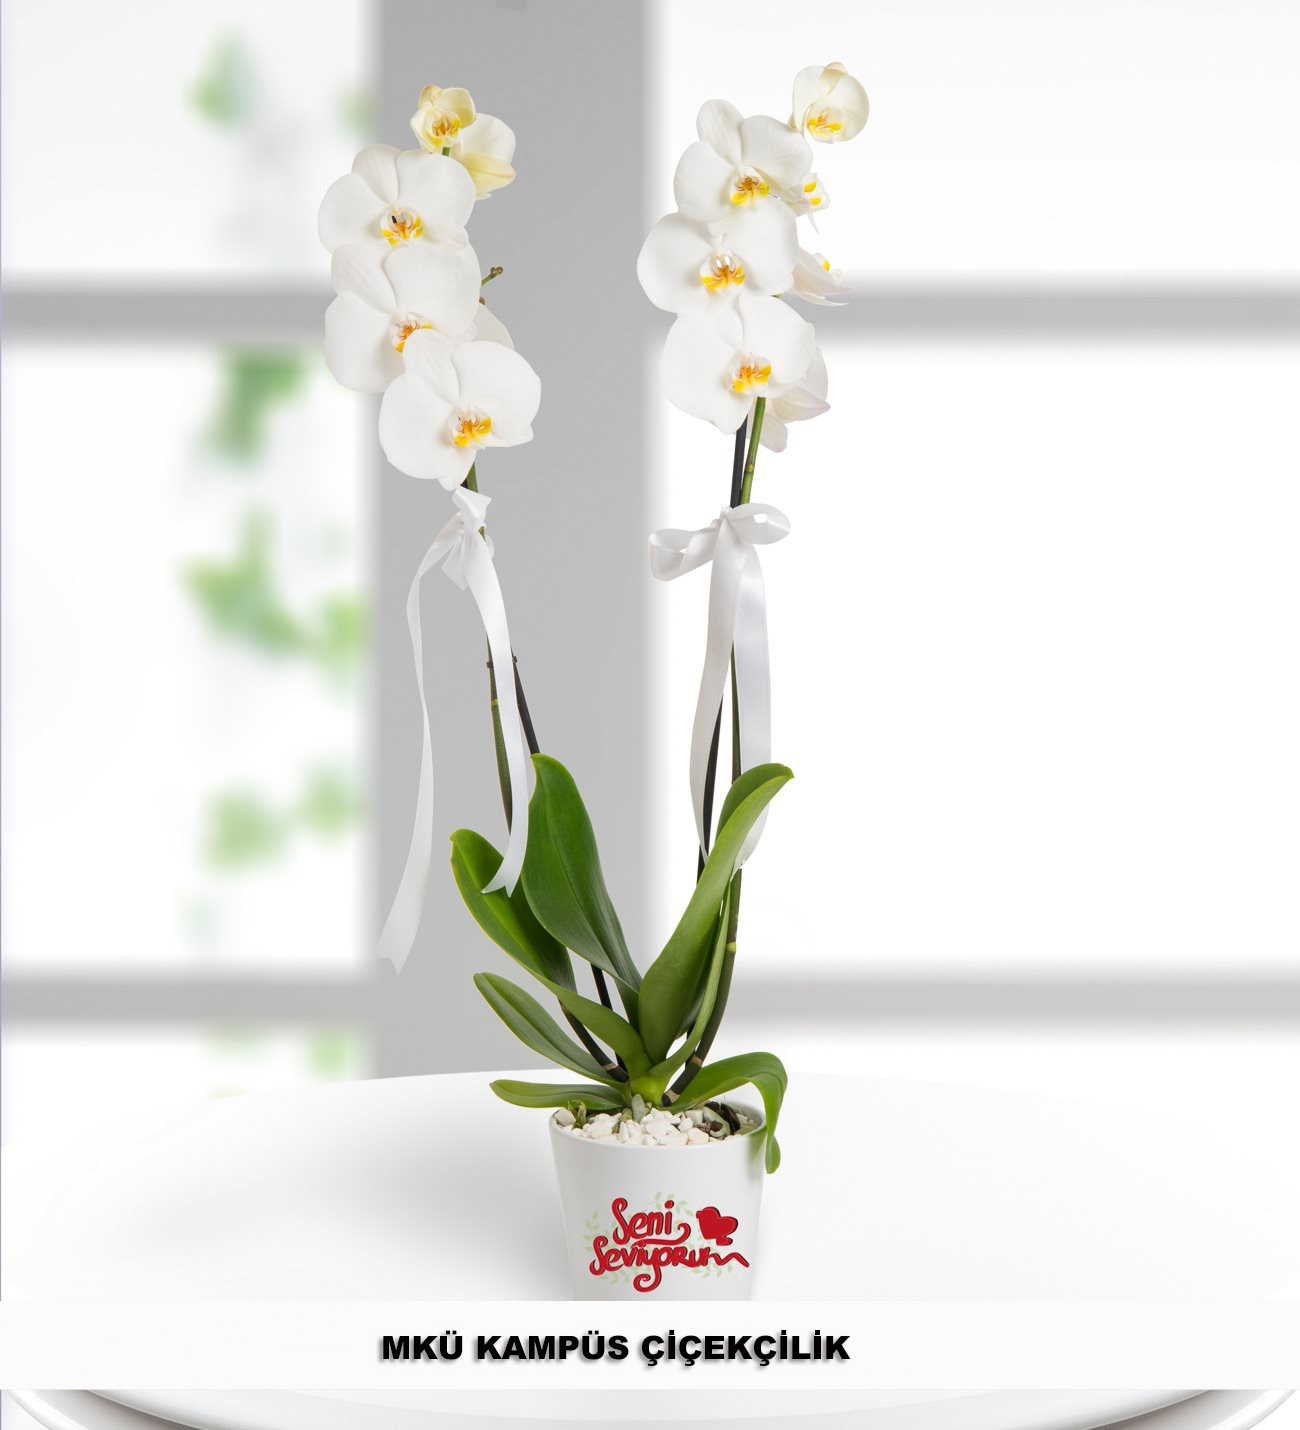 Seni Seviyorum Mesajlı 2 Dal Phalaenopsis Orkide